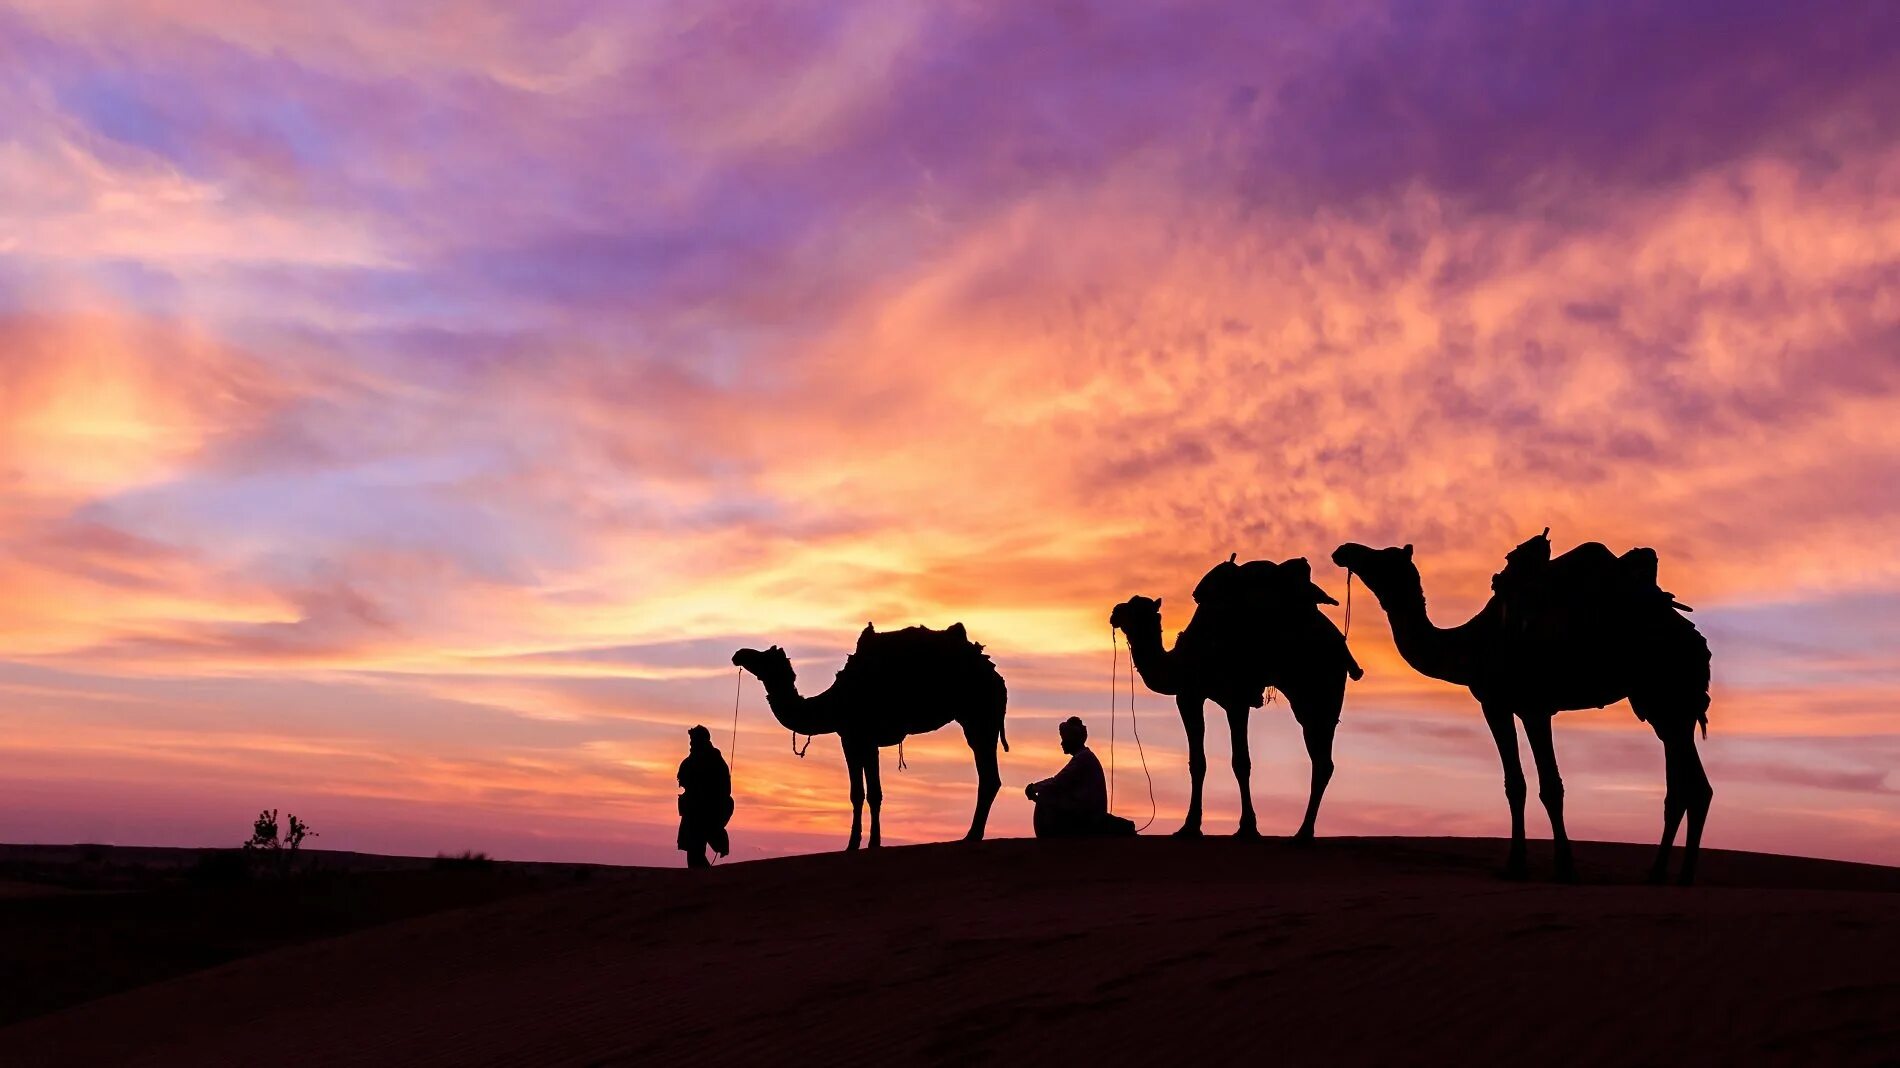 Небо караван. Караван с верблюдами в пустыне. Караван Аравийской пустыне ОАЭ. Арабы с караваном в пустыне. Караван верблюдов в пустыне.